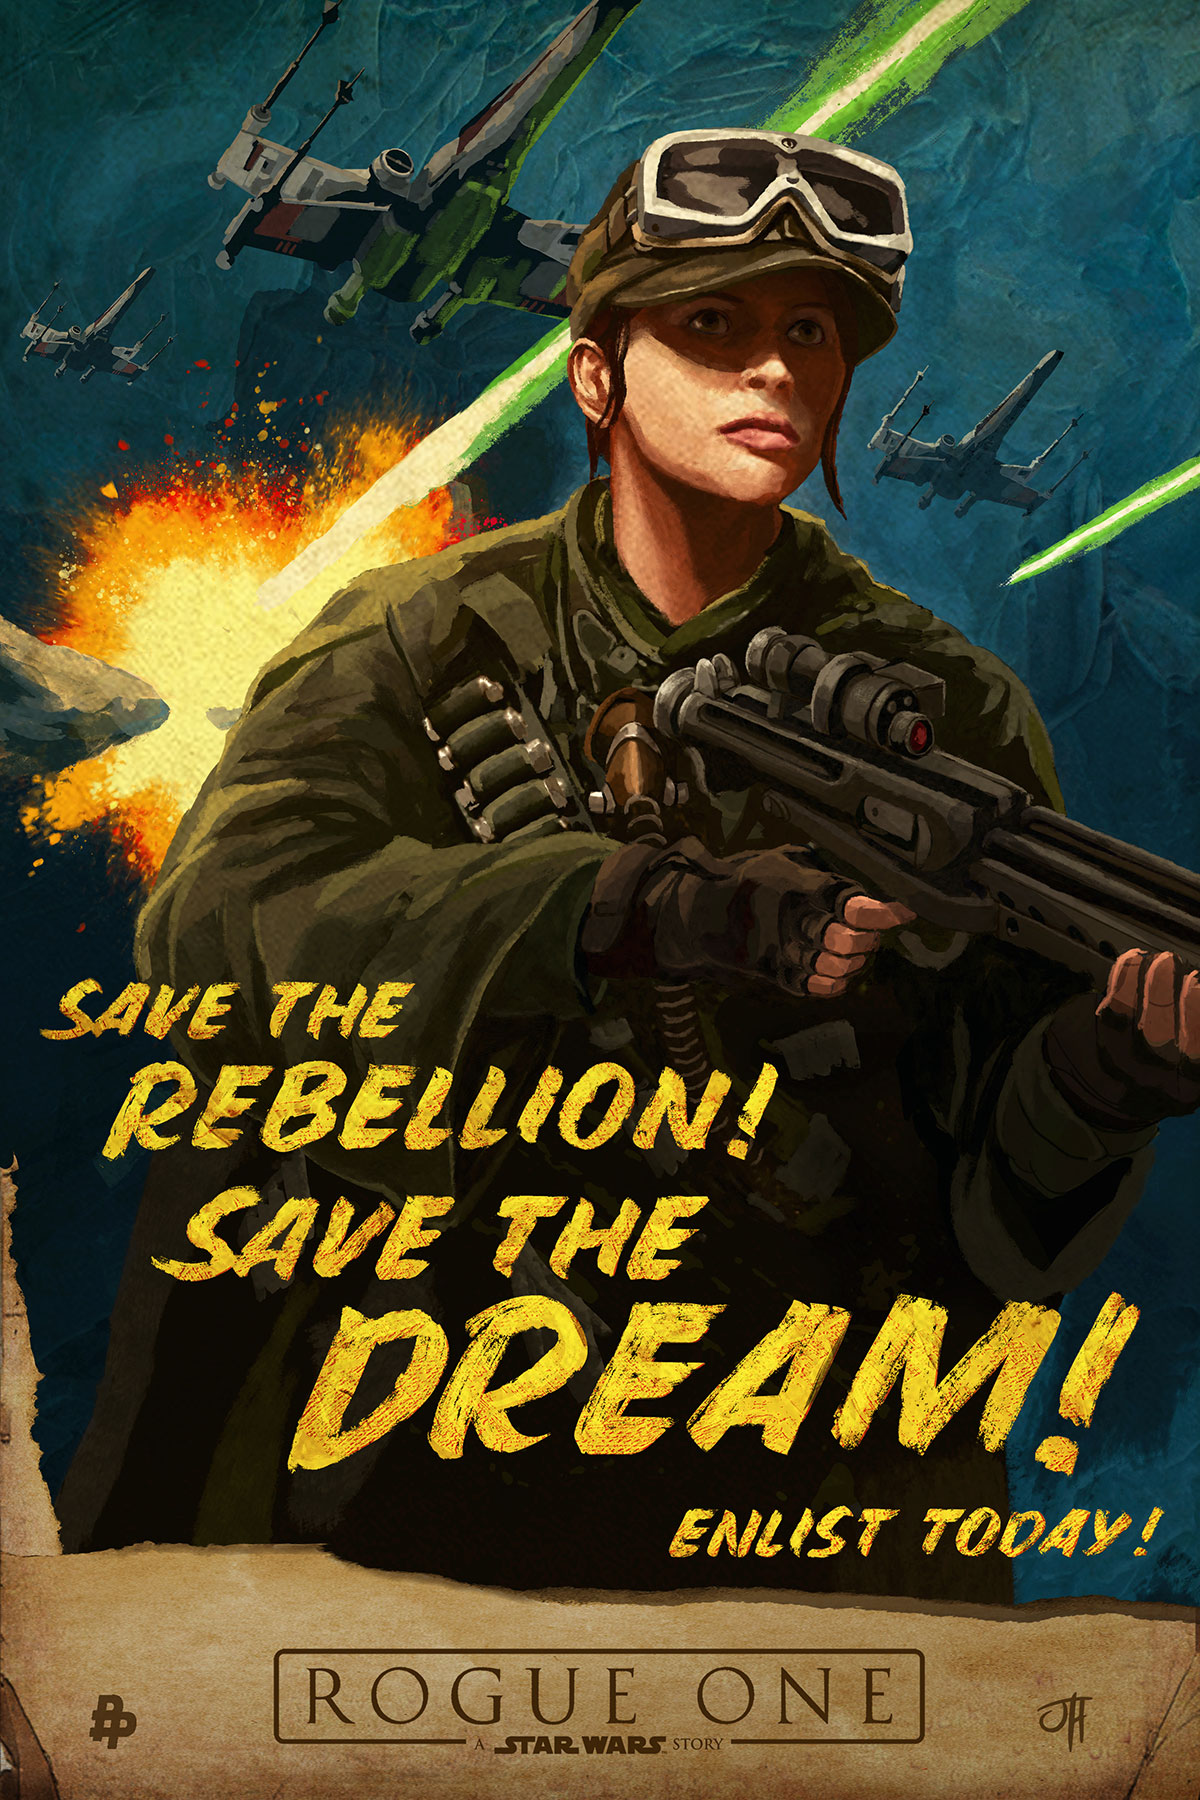 Rogue-One-John-Hughes-Star-Wars-Poster-Posse.jpg